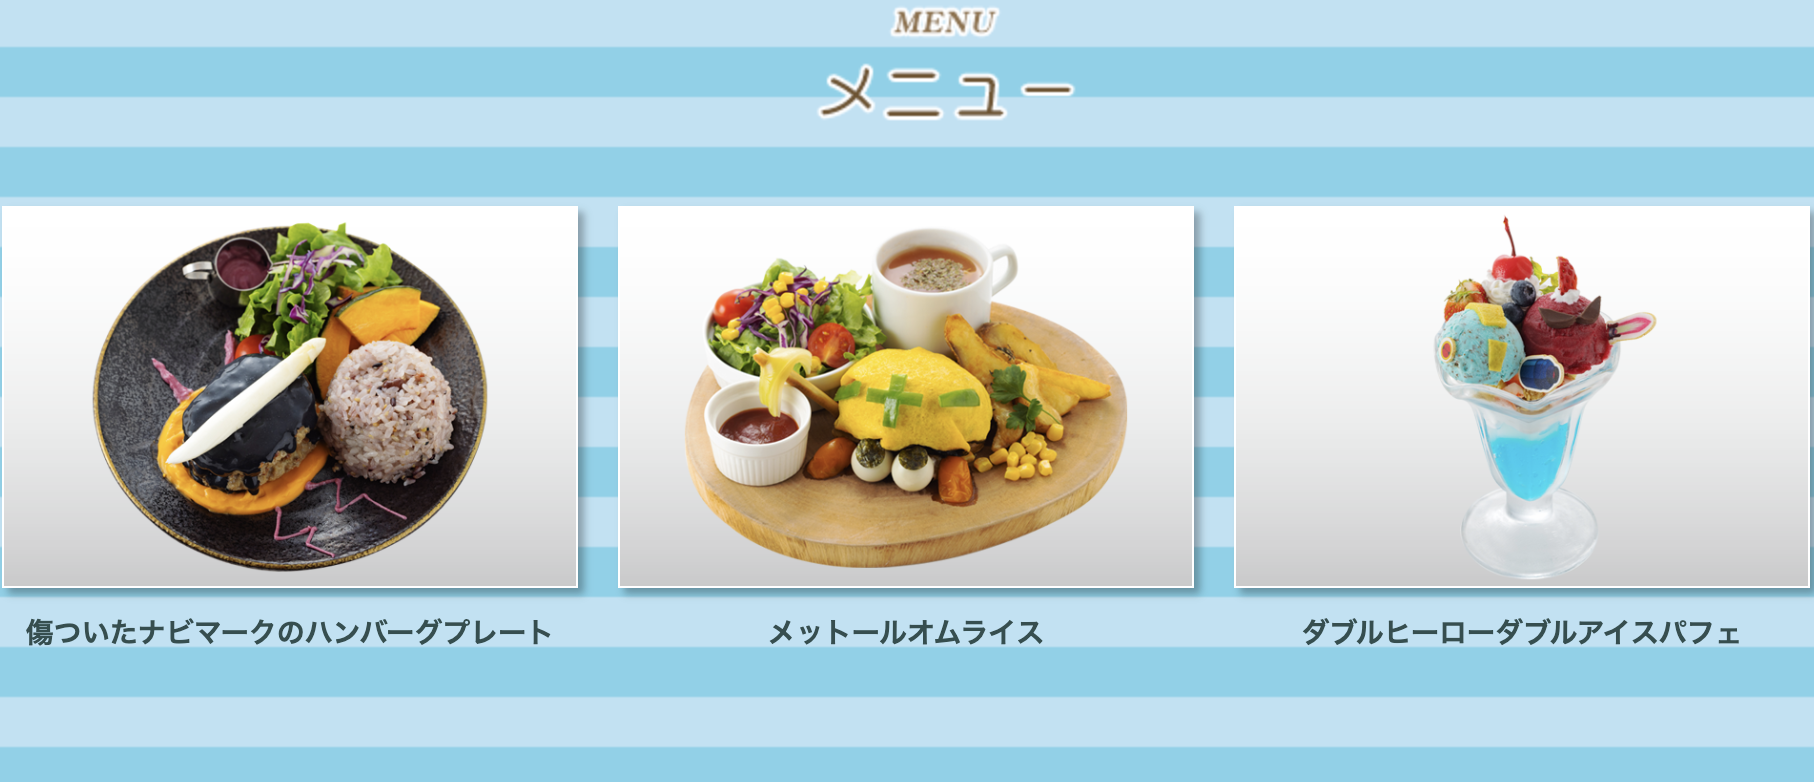 From Capcom Cafe's official site